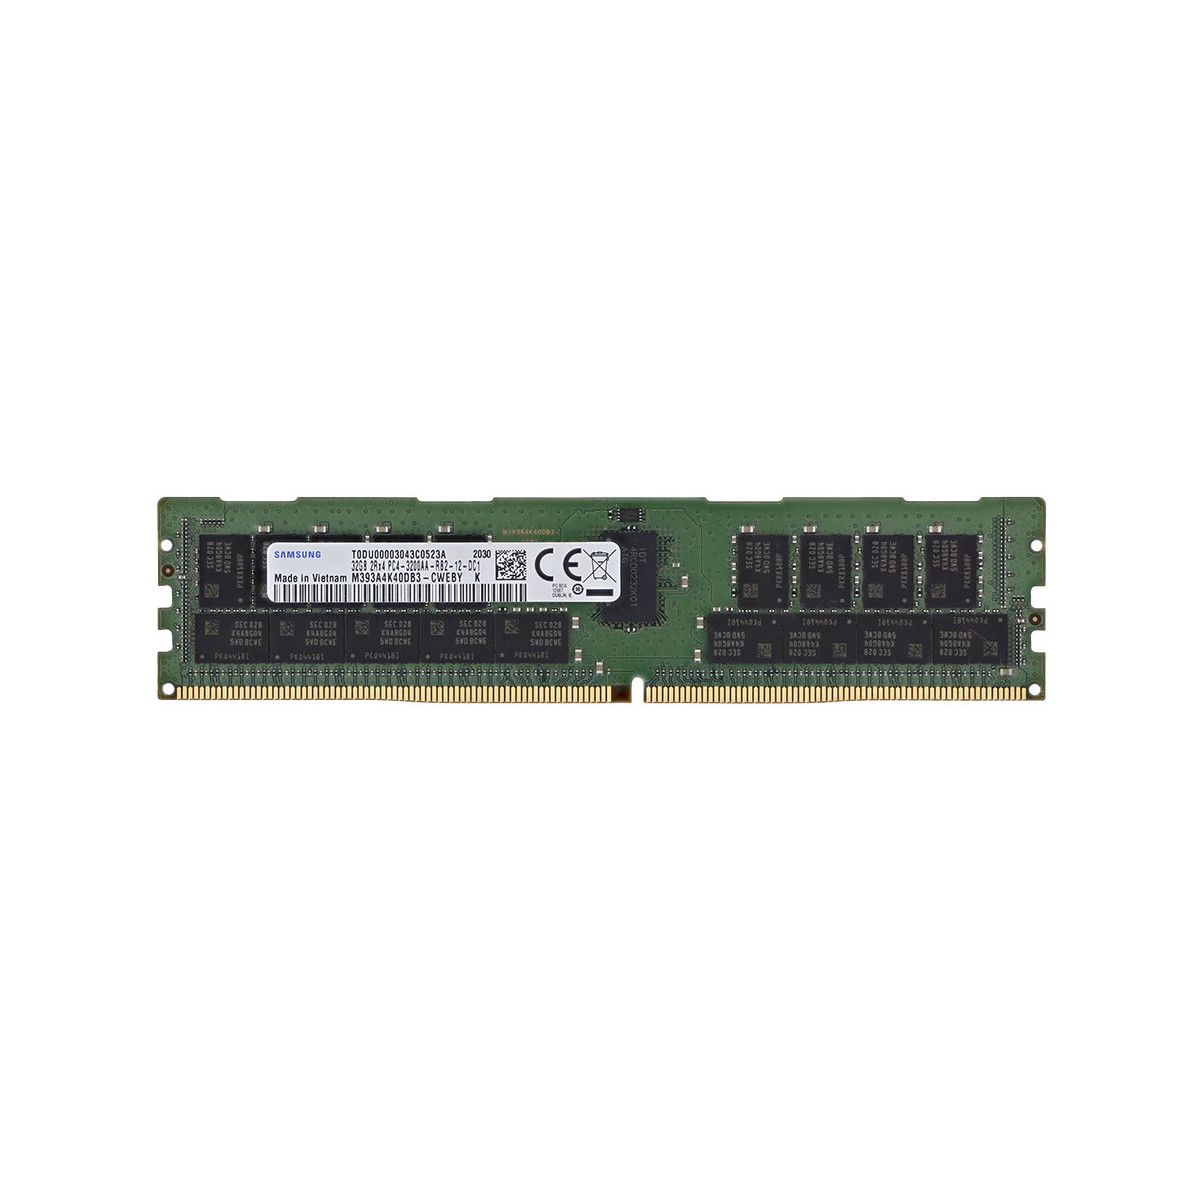 AB663423-MS - Memstar 1x 32GB DDR4-3200 RDIMM PC4-25600R - Mem-Star OEM compatibile Memoria 1 - Memstar 